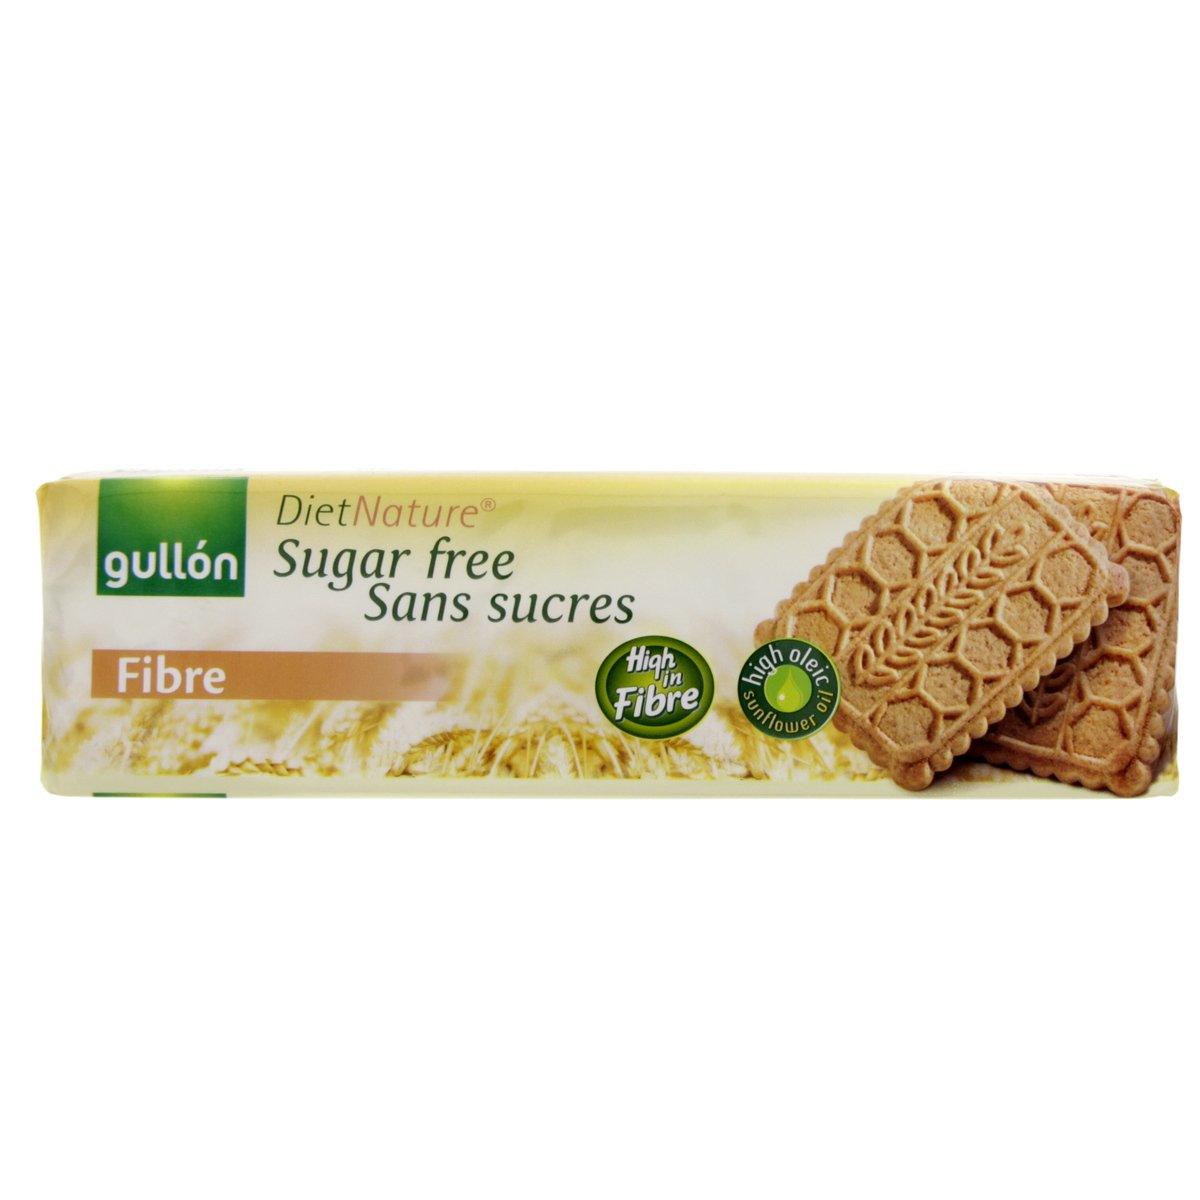 Gullon Diet Nature Sugar Free Fibre 170 g